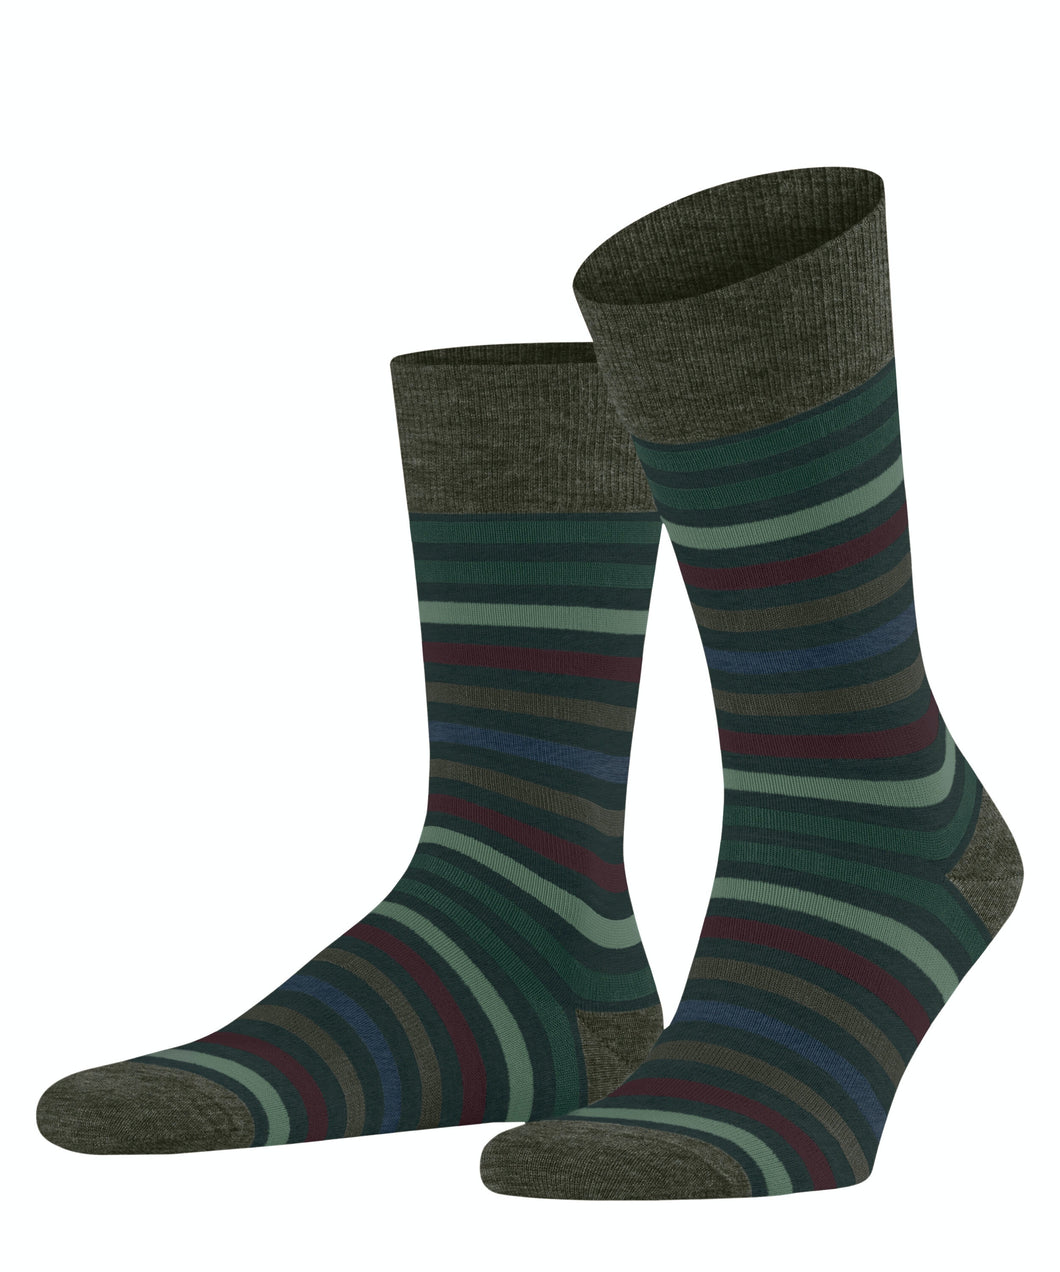 FALKE Tinted Stripe Socks in Forrest Green